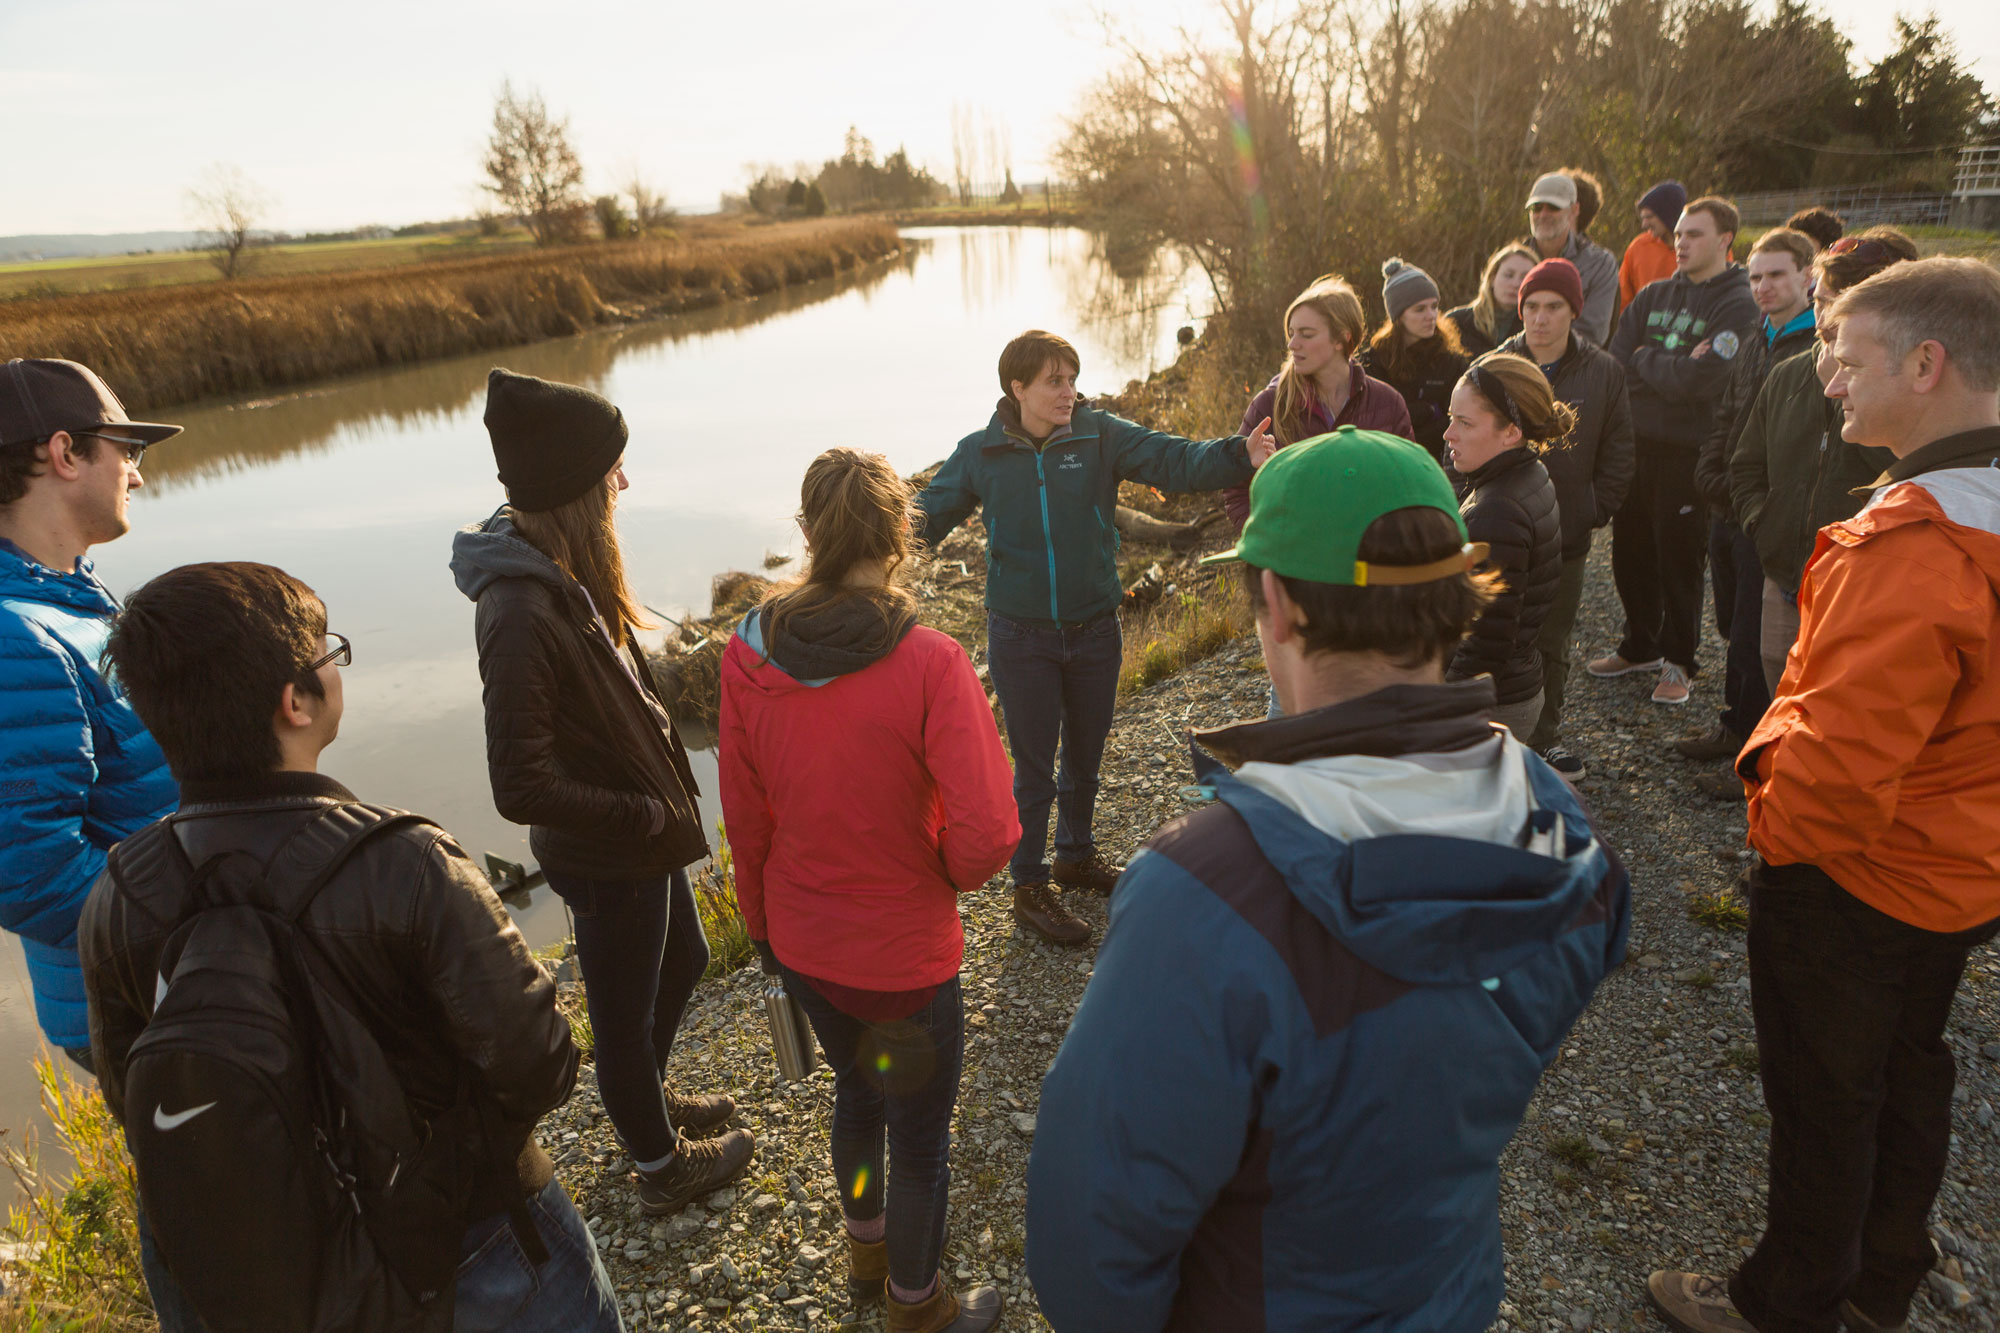 A class stands watching watching their professor teach next to the Skagit River.